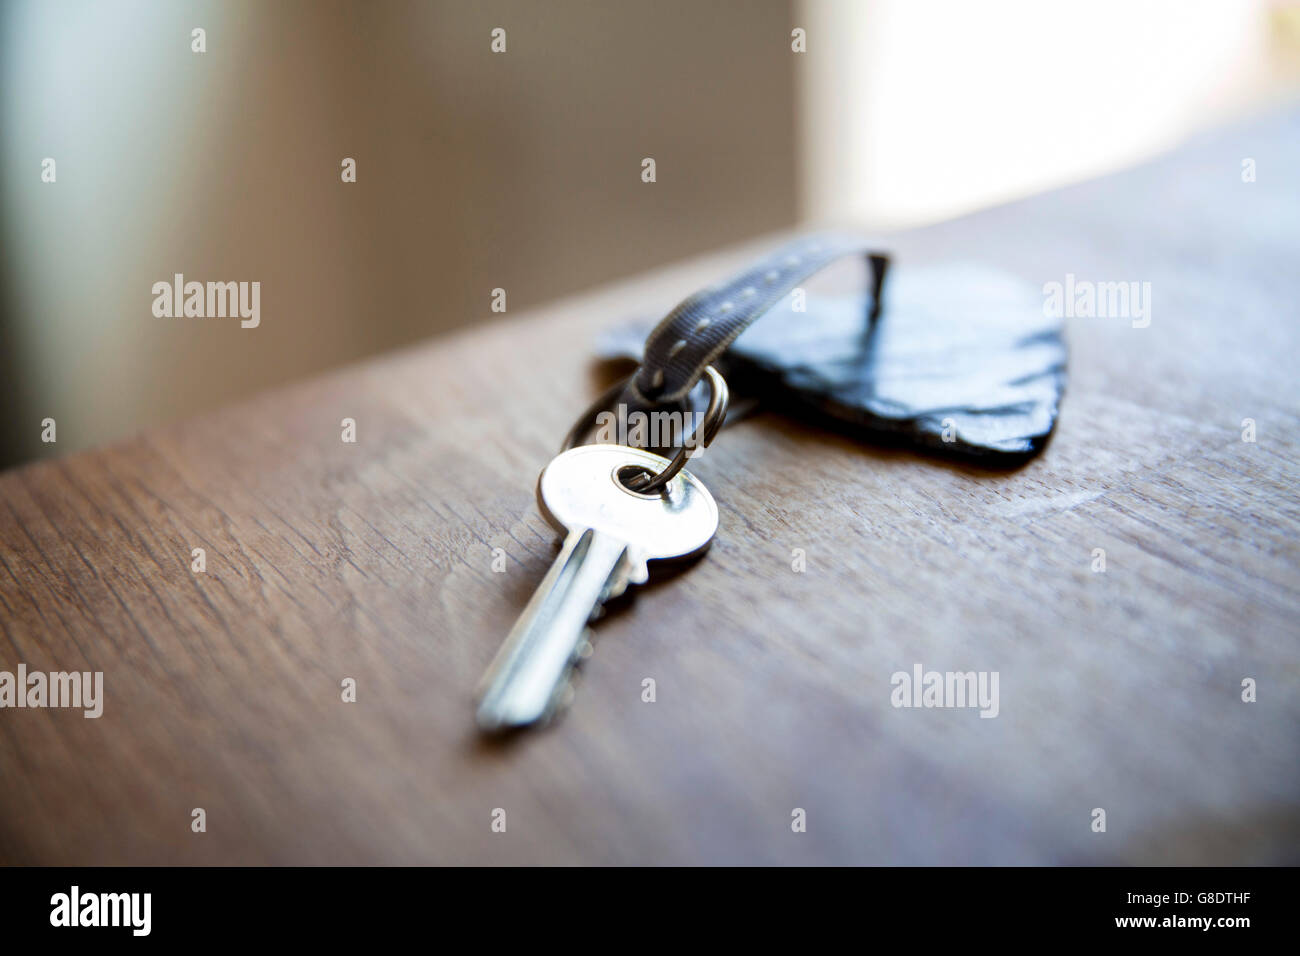 key on wooden worktop Stock Photo